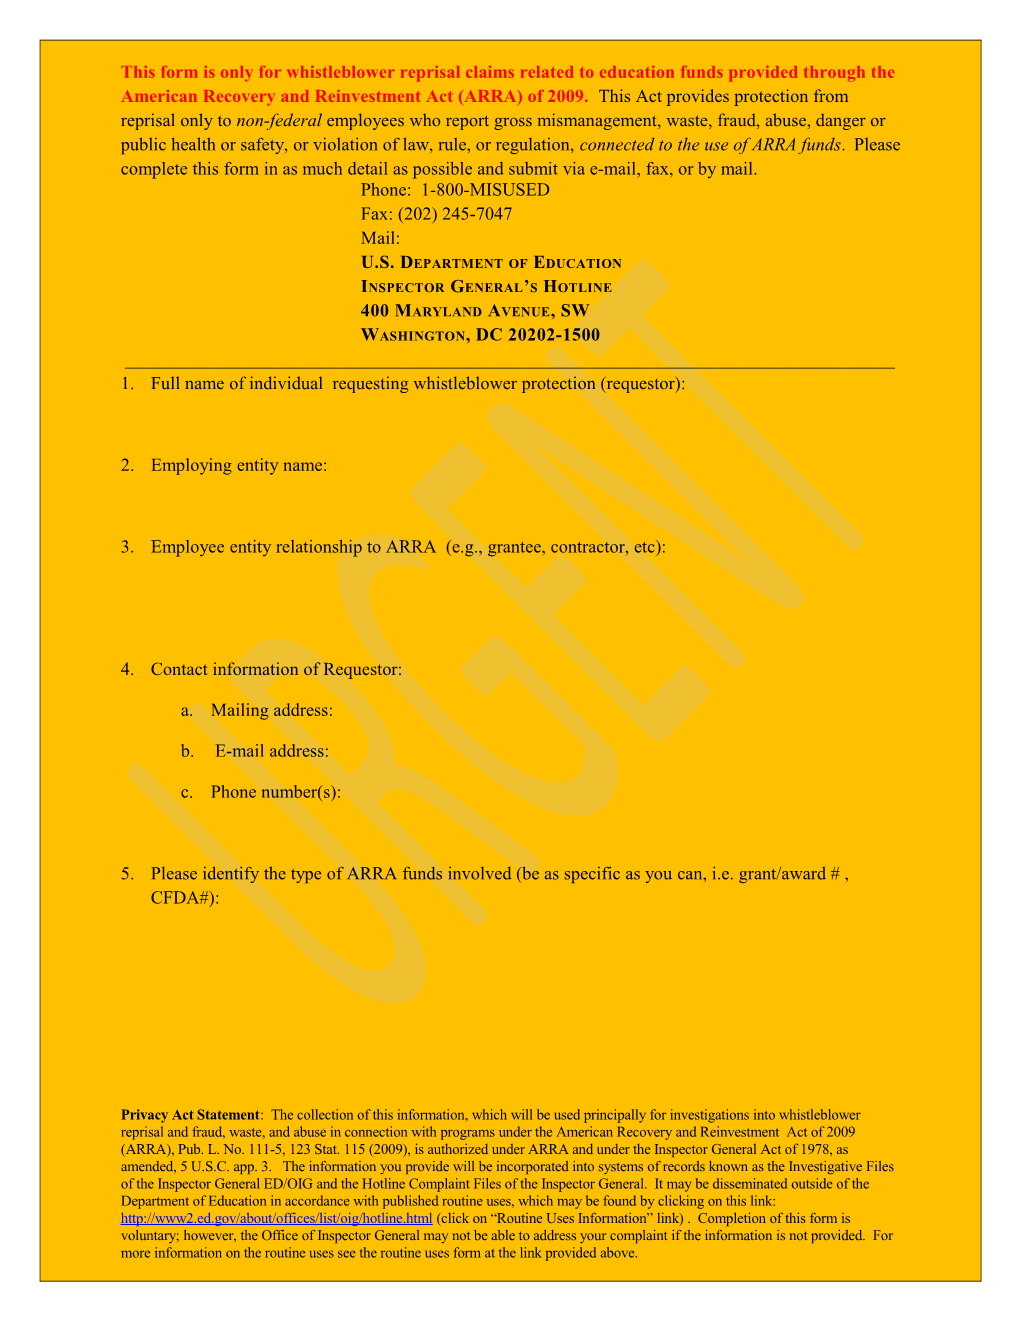 ARRA Whistleblower Hotline Form (PDF)